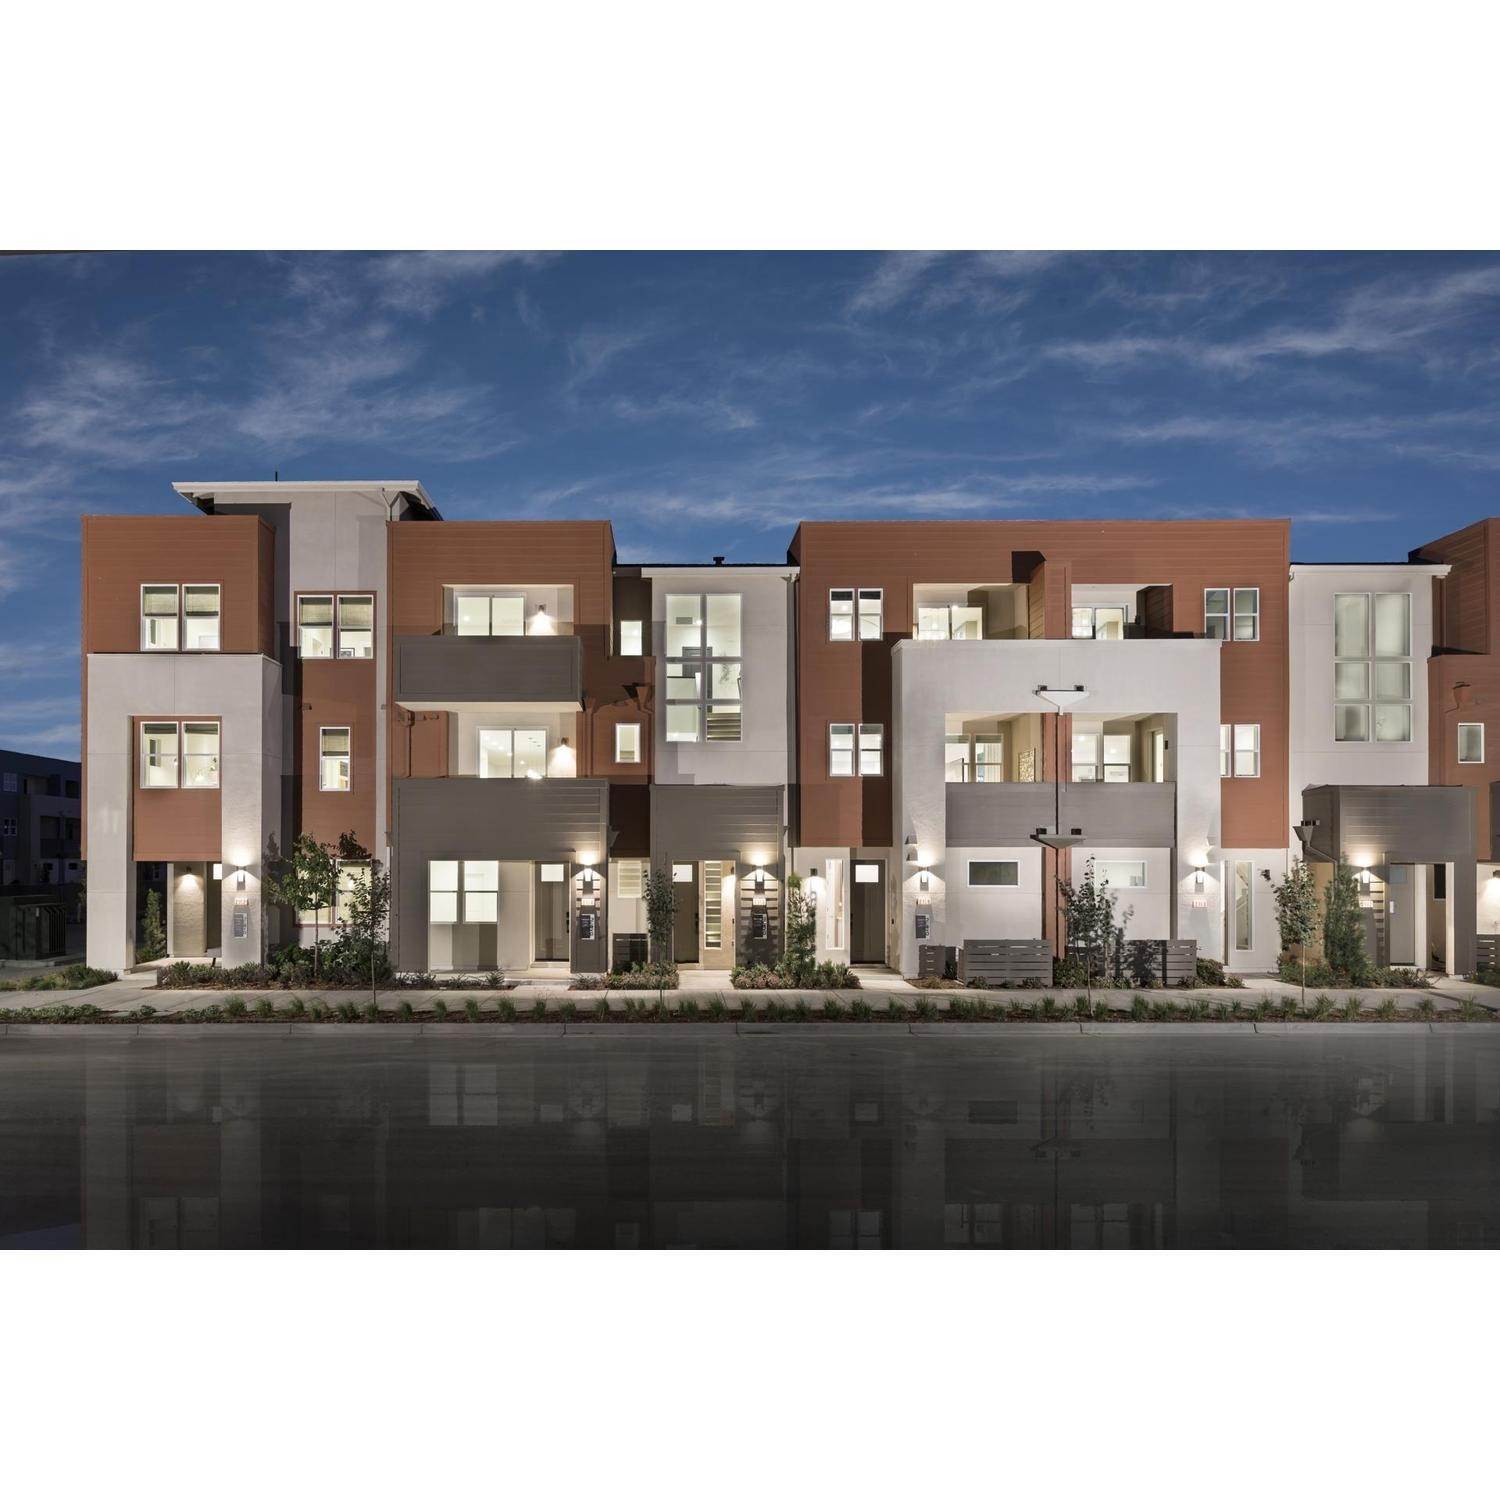 单亲家庭 为 销售 在 Nuevo - Terraces Plan 3 3505 Kifer Rd SANTA CLARA, CALIFORNIA 95051 UNITED STATES